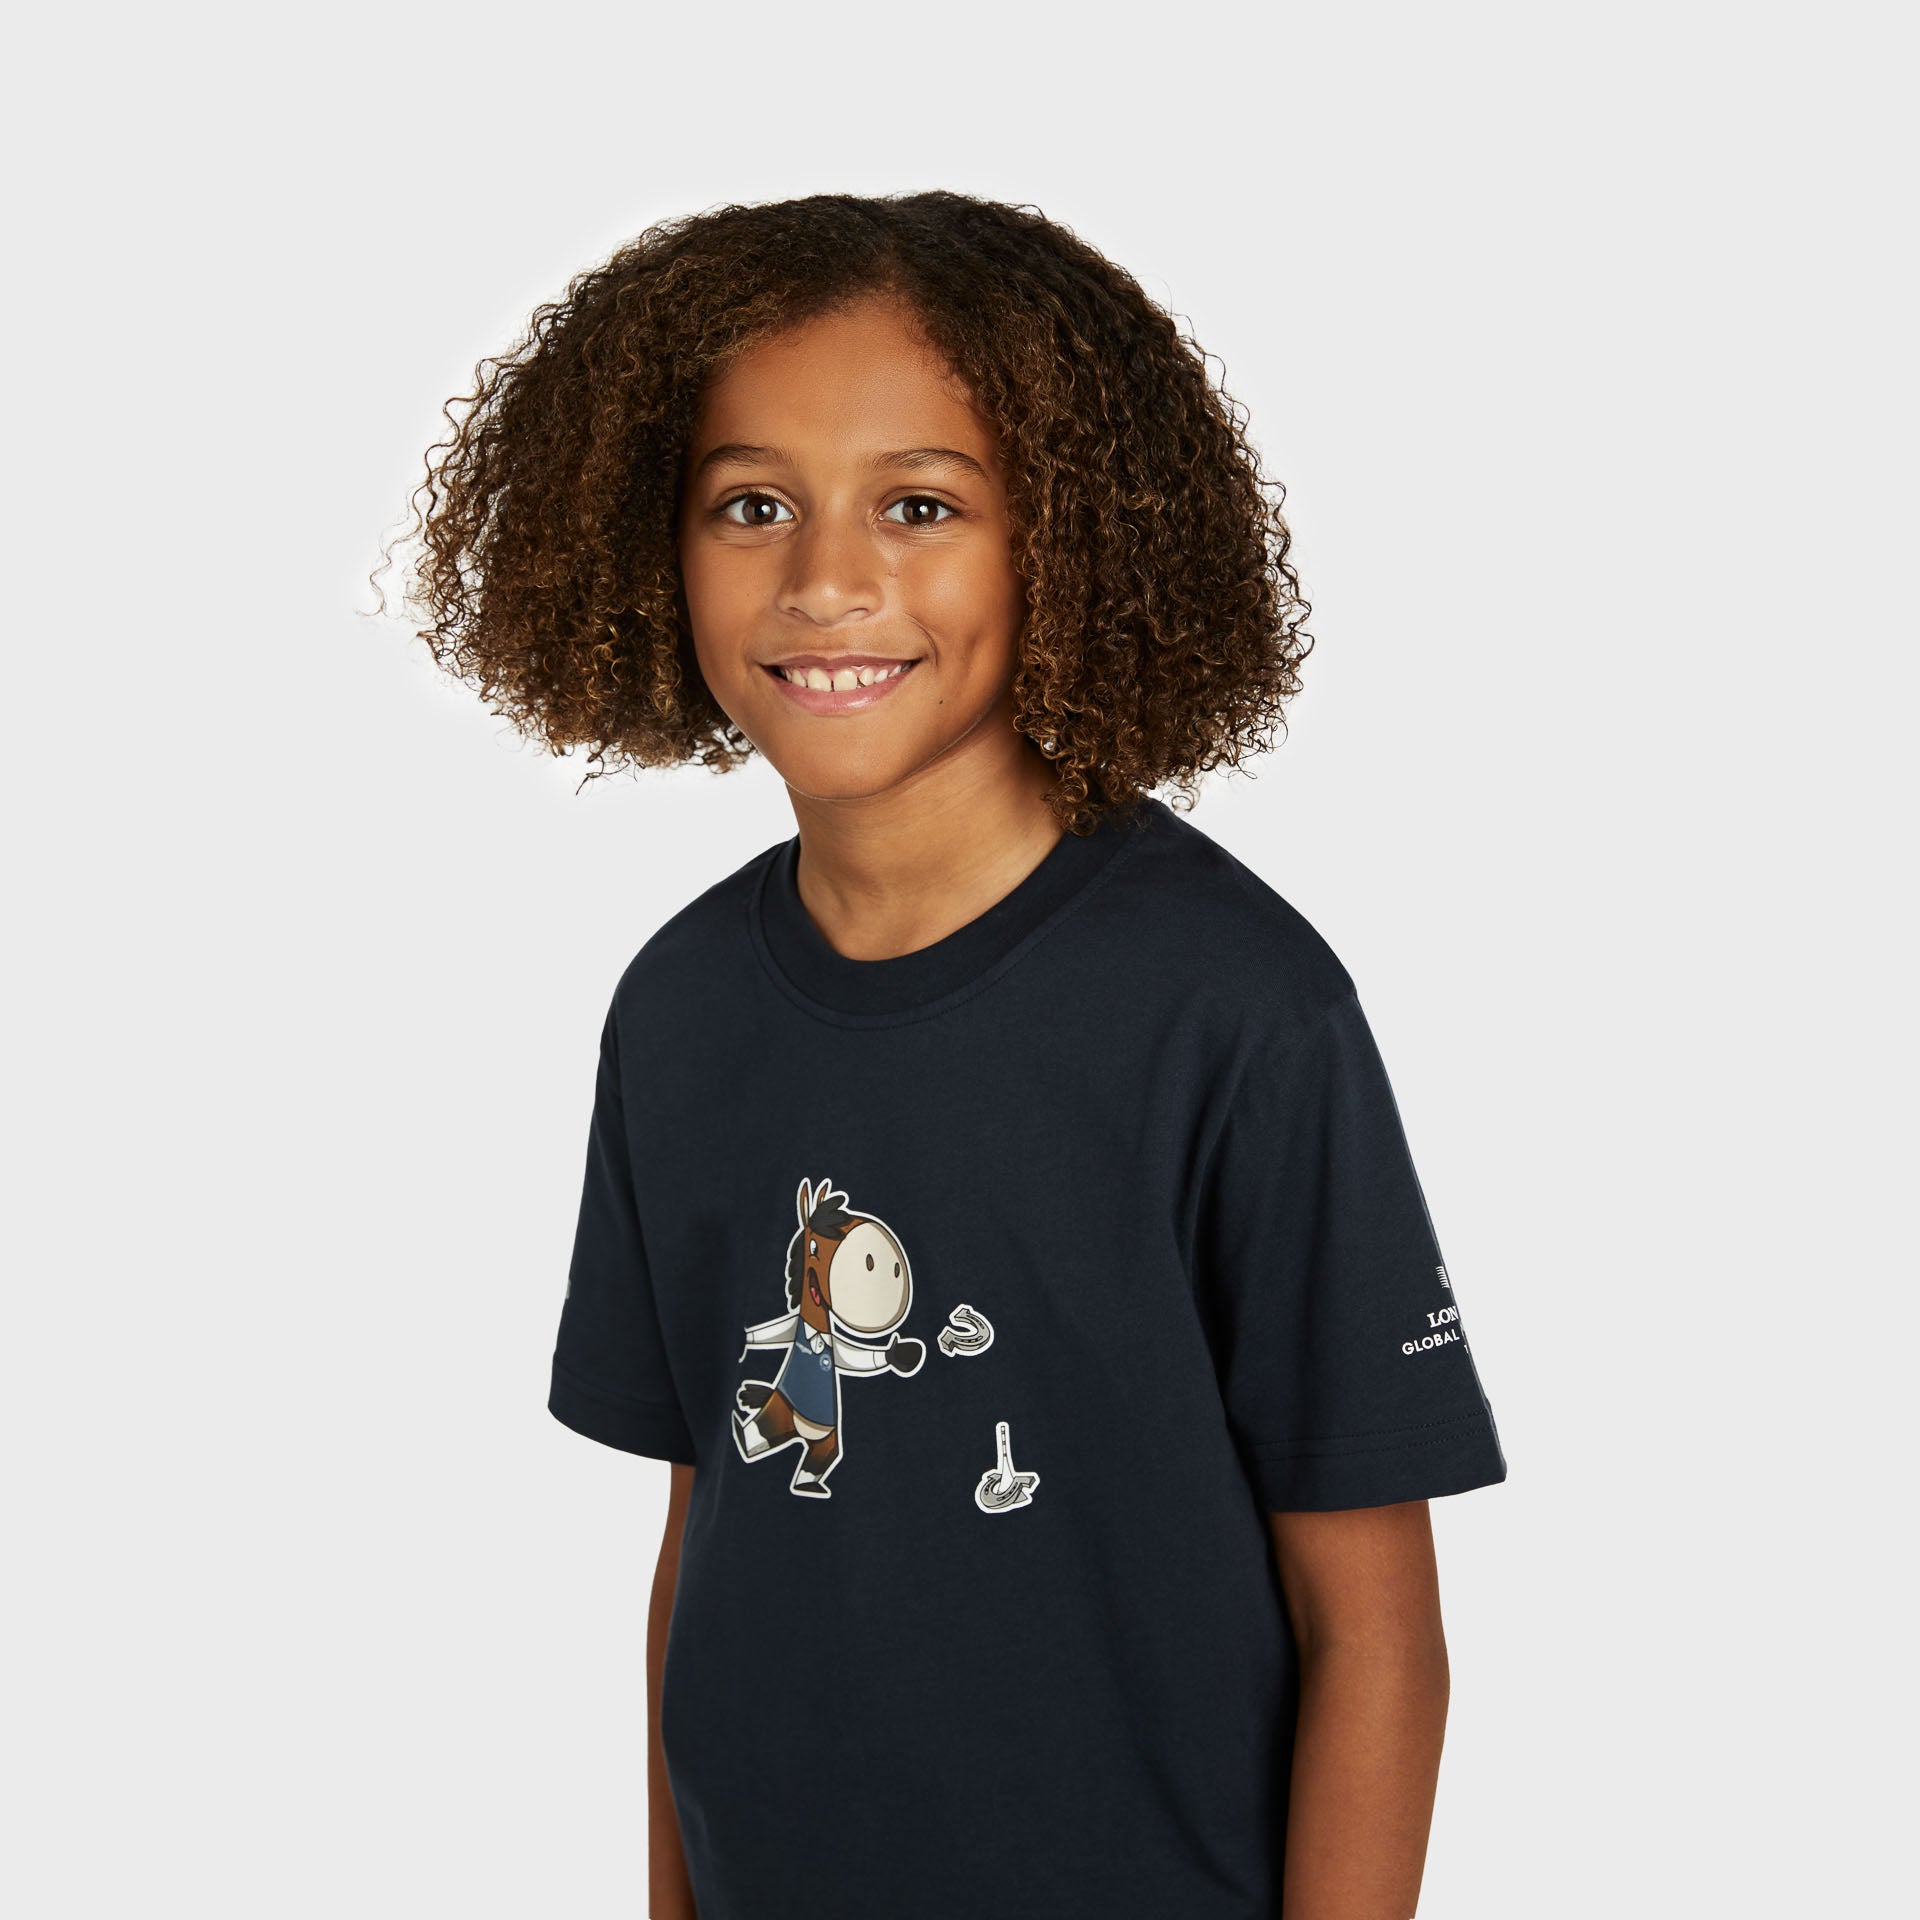 LGCT Sammy #1 Kids T-Shirt - Navy Blue